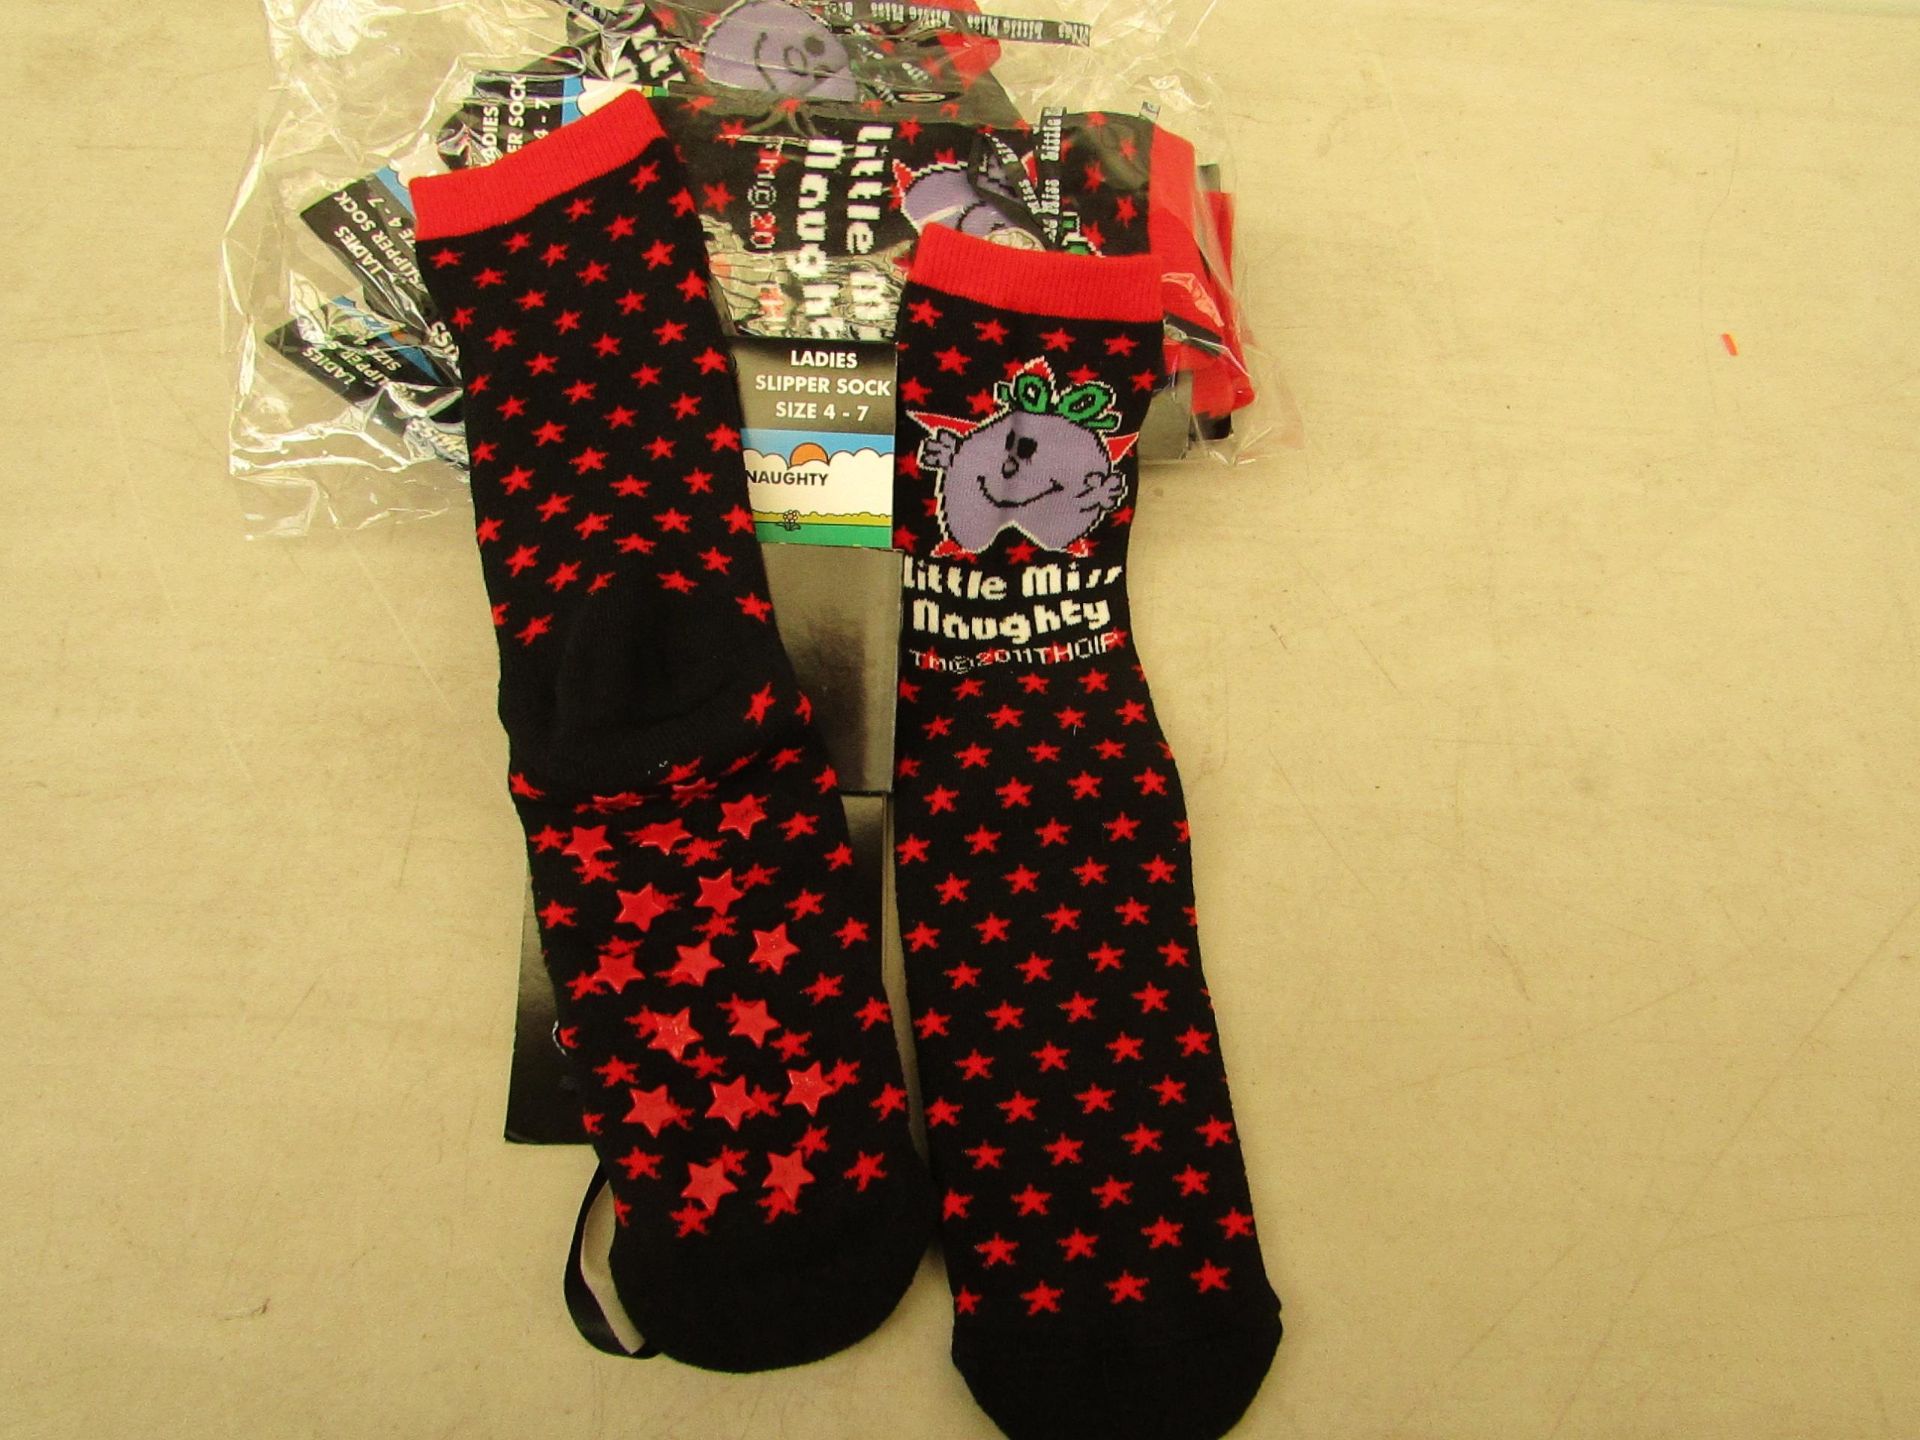 5 X Packs of 5 Little Miss Naughty Ladies Slipper socks all size 4-7 all new in packaging